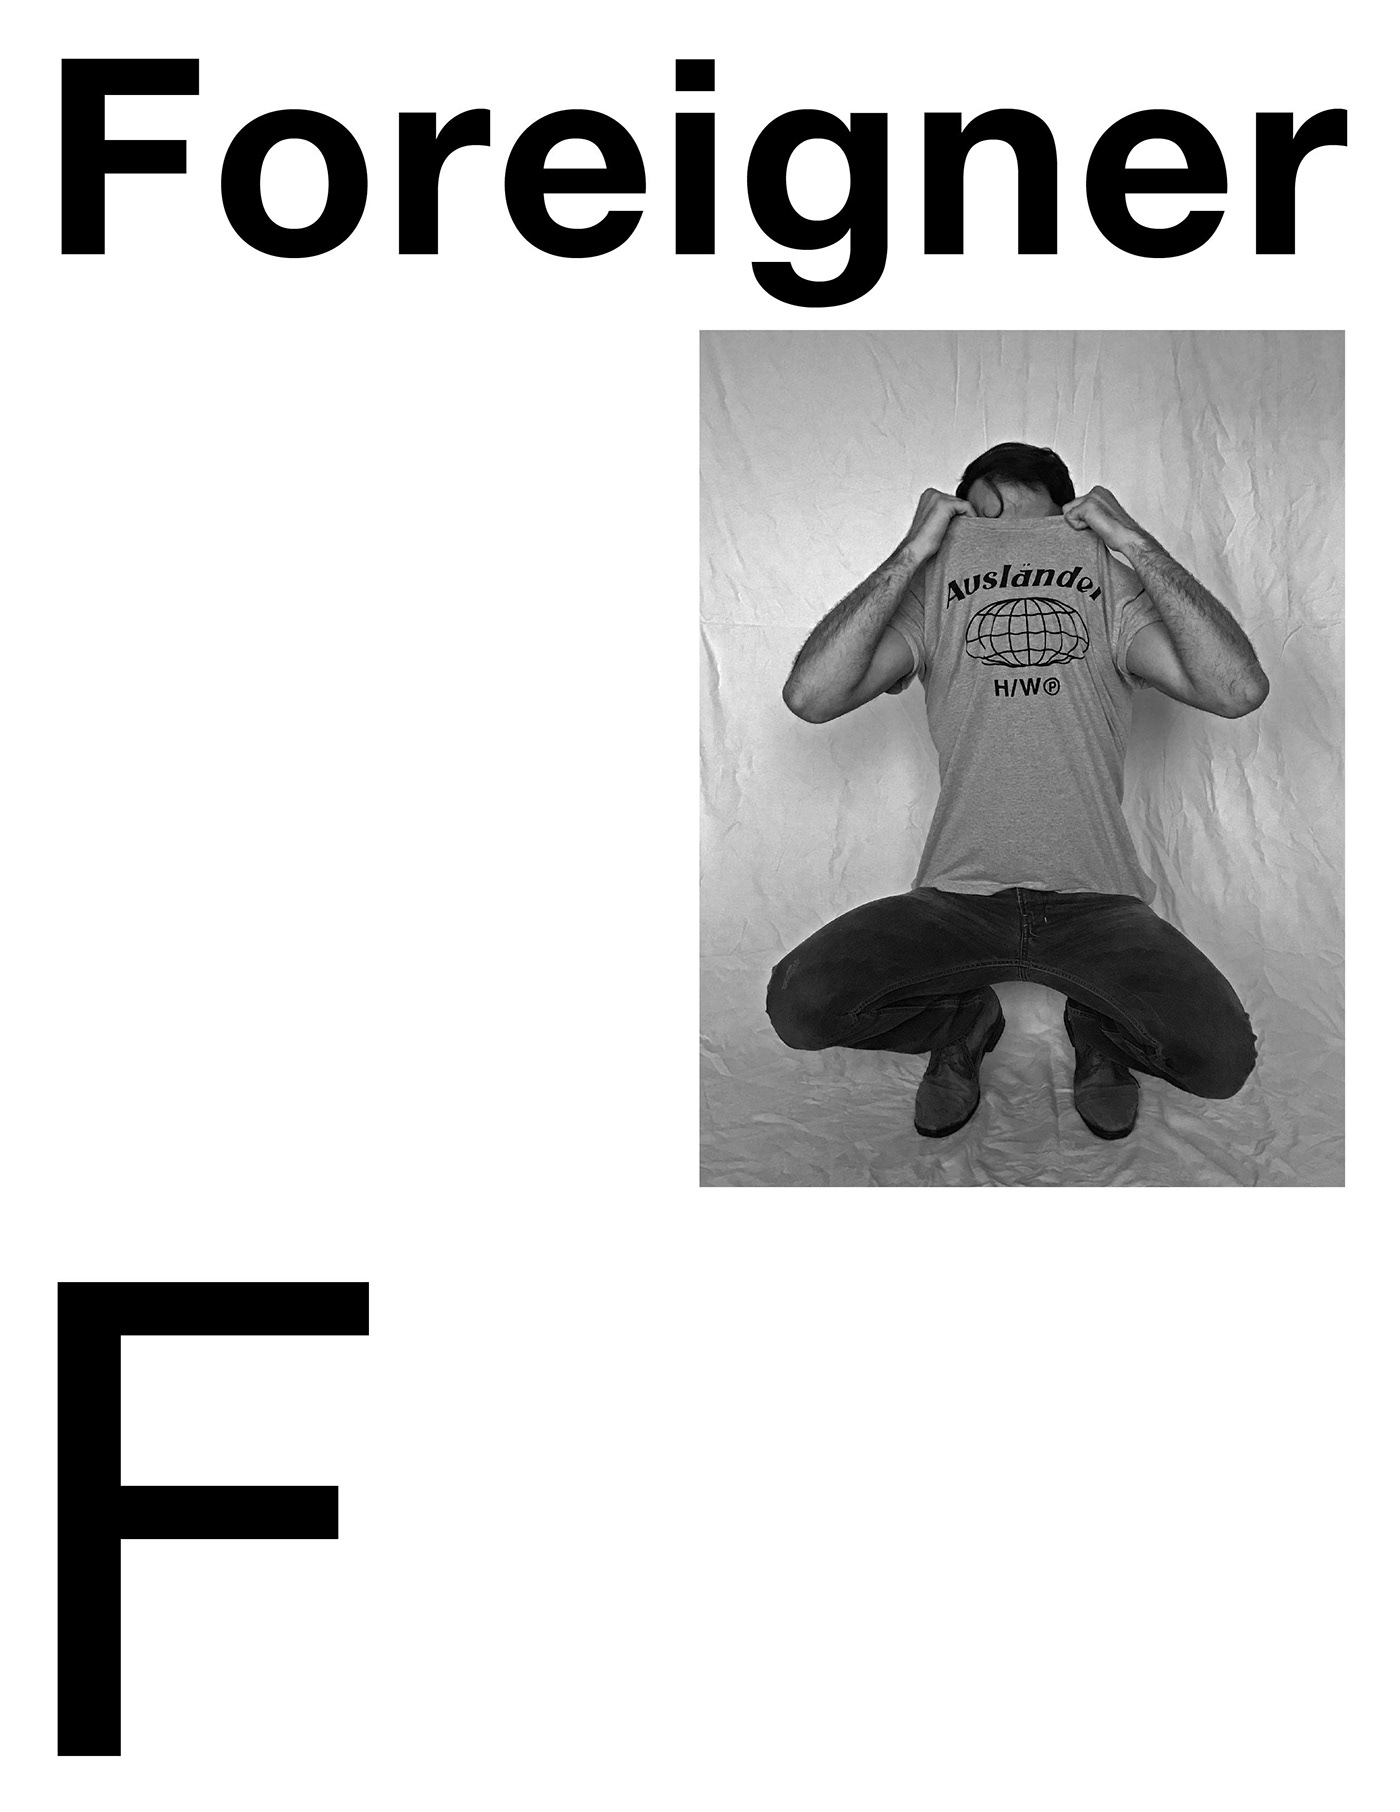 Afghanistan Ausländer foreigners high instagram Refugees streetwear t-shirt Tshirt Design walker